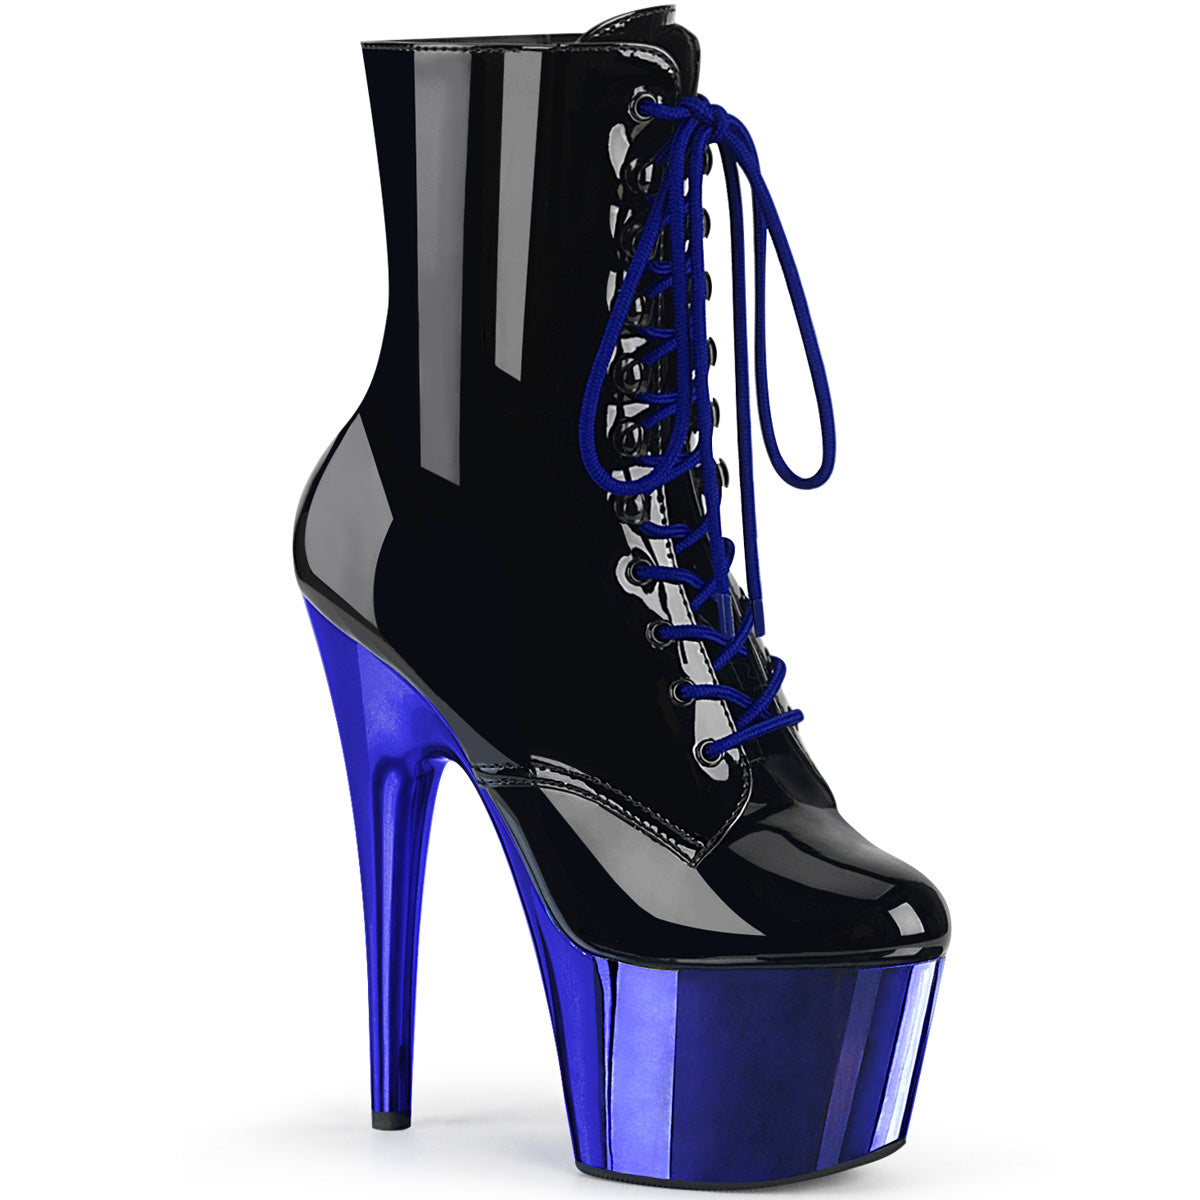 ADORE-1020 Black & Blue Calf High Boots